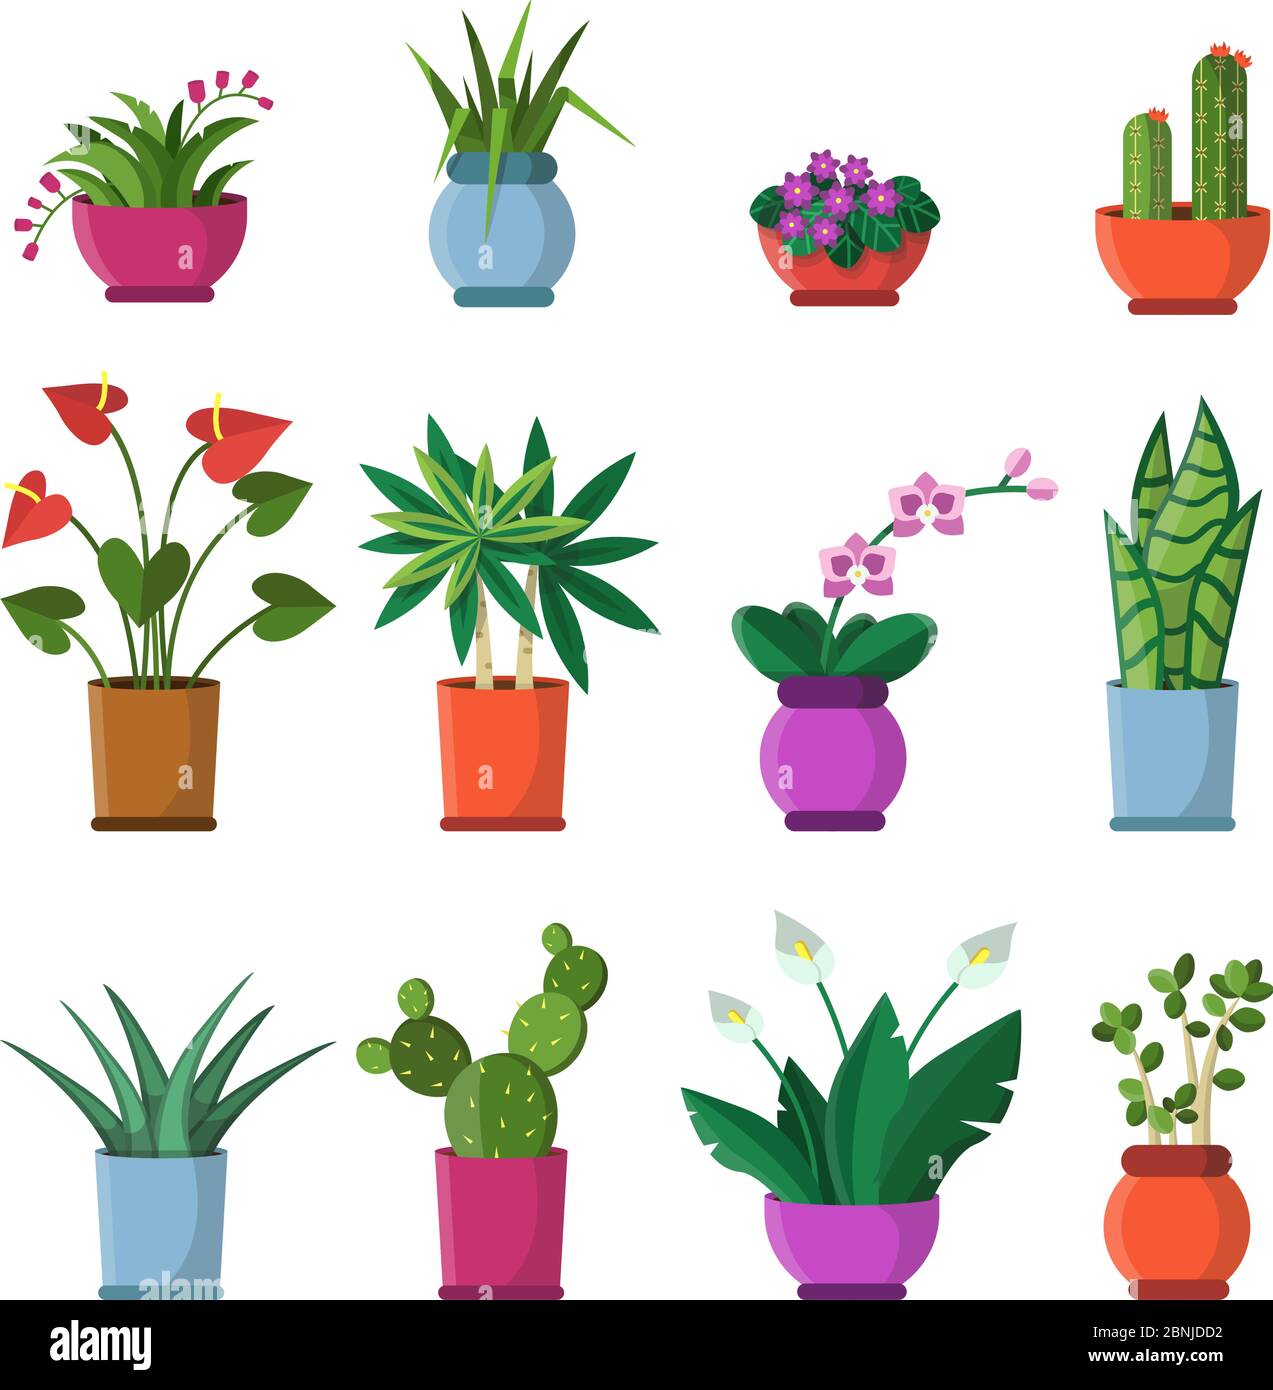 Vector illustrations house plants pots Stock Vector & Art - Alamy